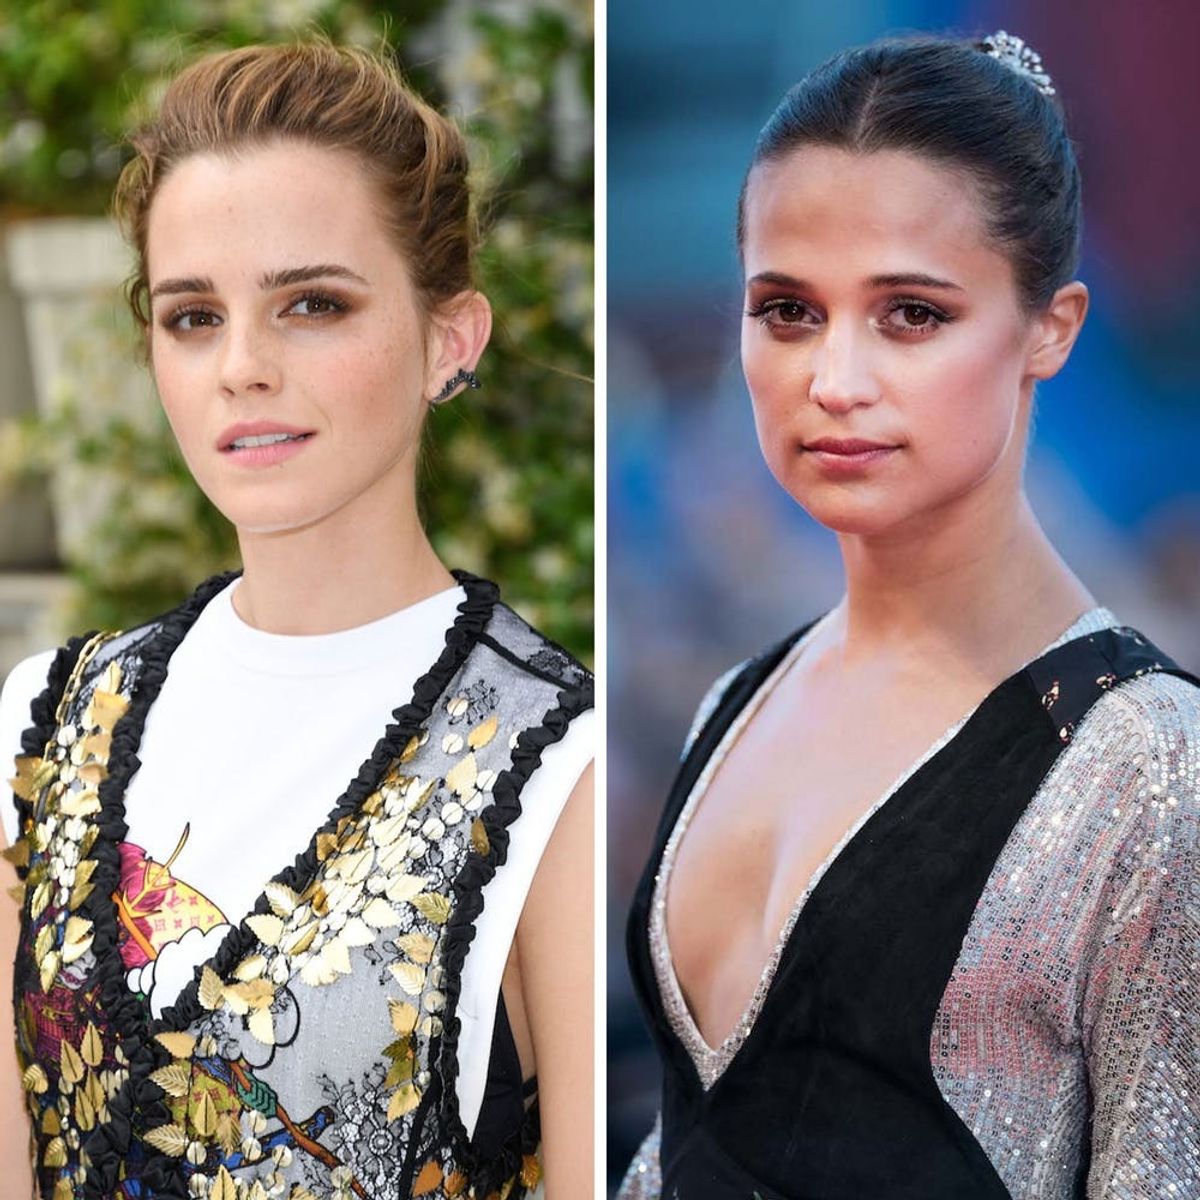 Golden Globes 2018 Presenters Include Gal Gadot, Emma Watson, Alicia Vikander, and More A-List Stars